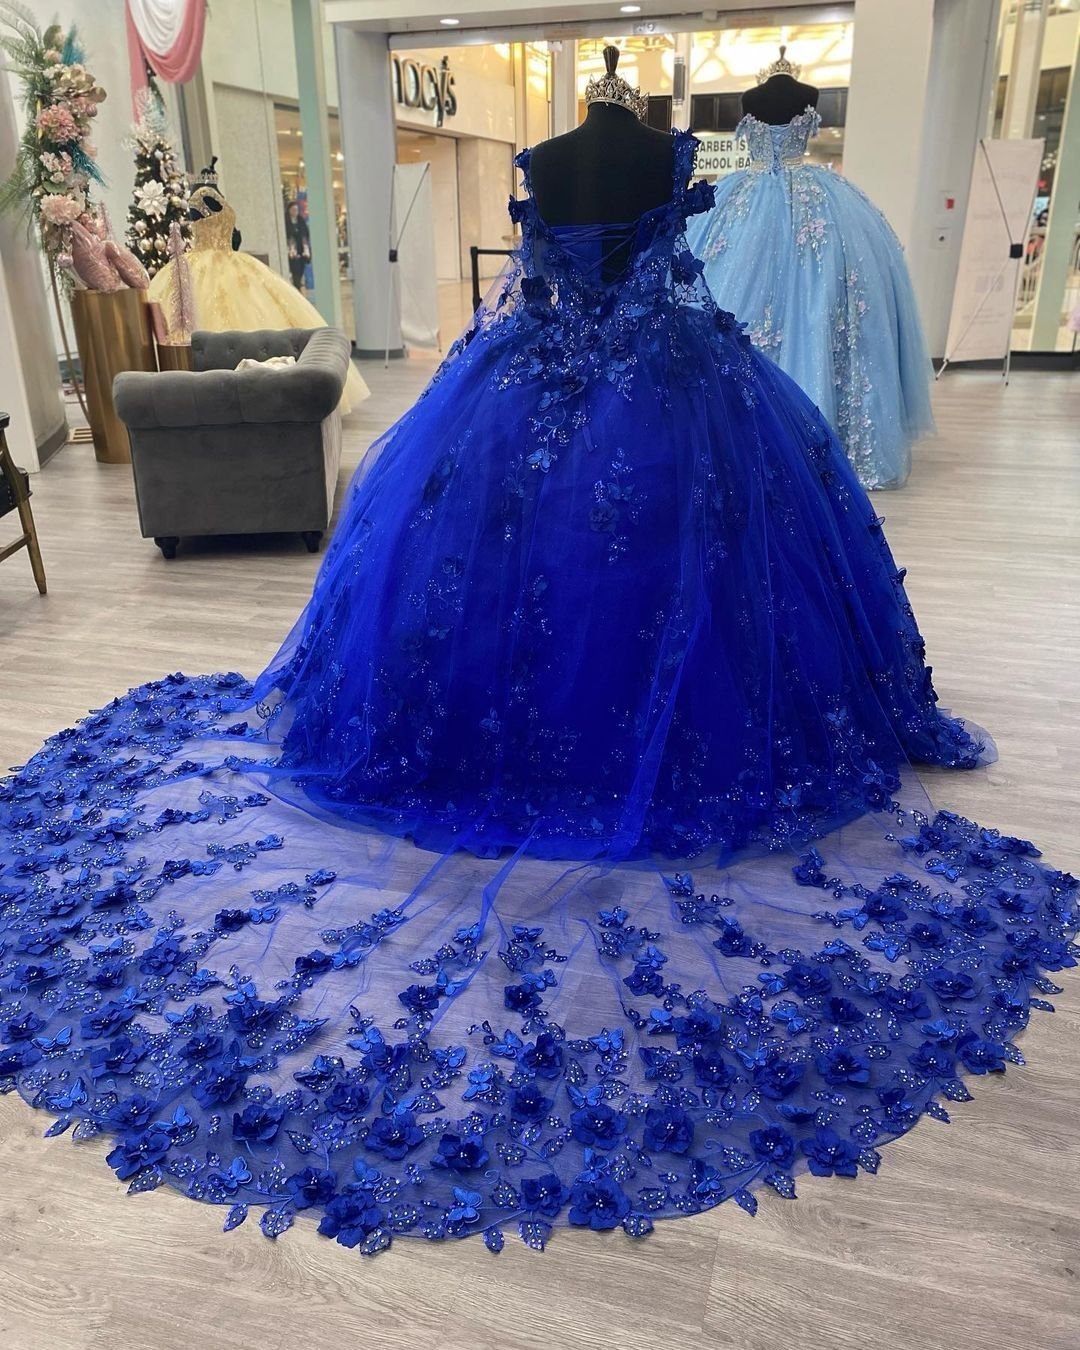 Royal Blue Princess Dresses Girls Ball Gown Royal Blue Dress 